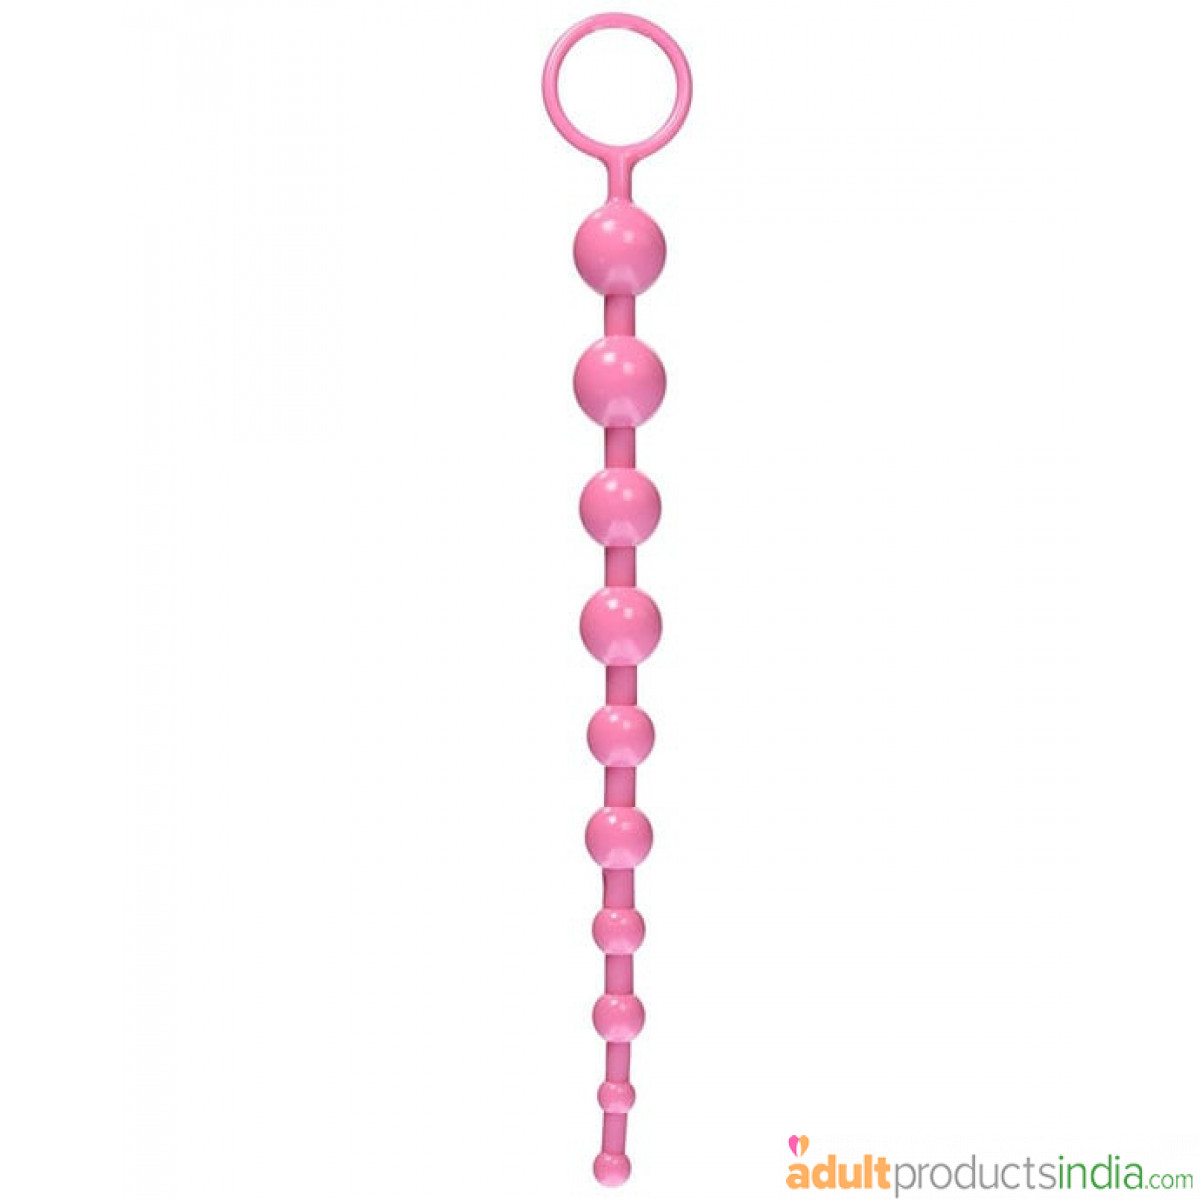 Anal beads pink